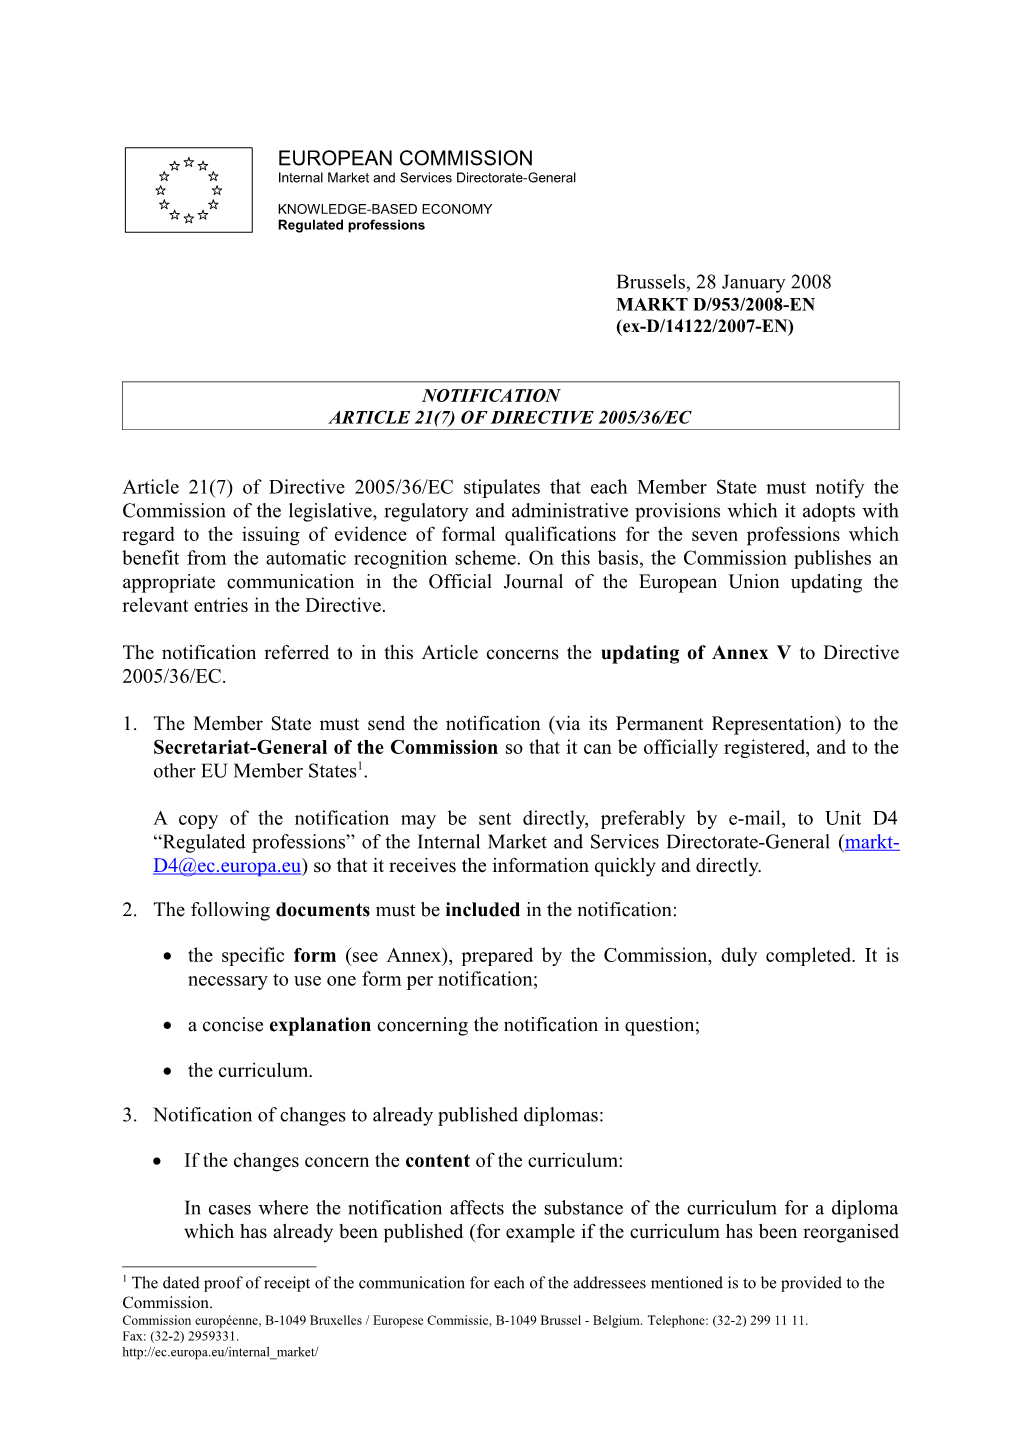 Notification Article 21(7) of Directive 2005/36/Ec